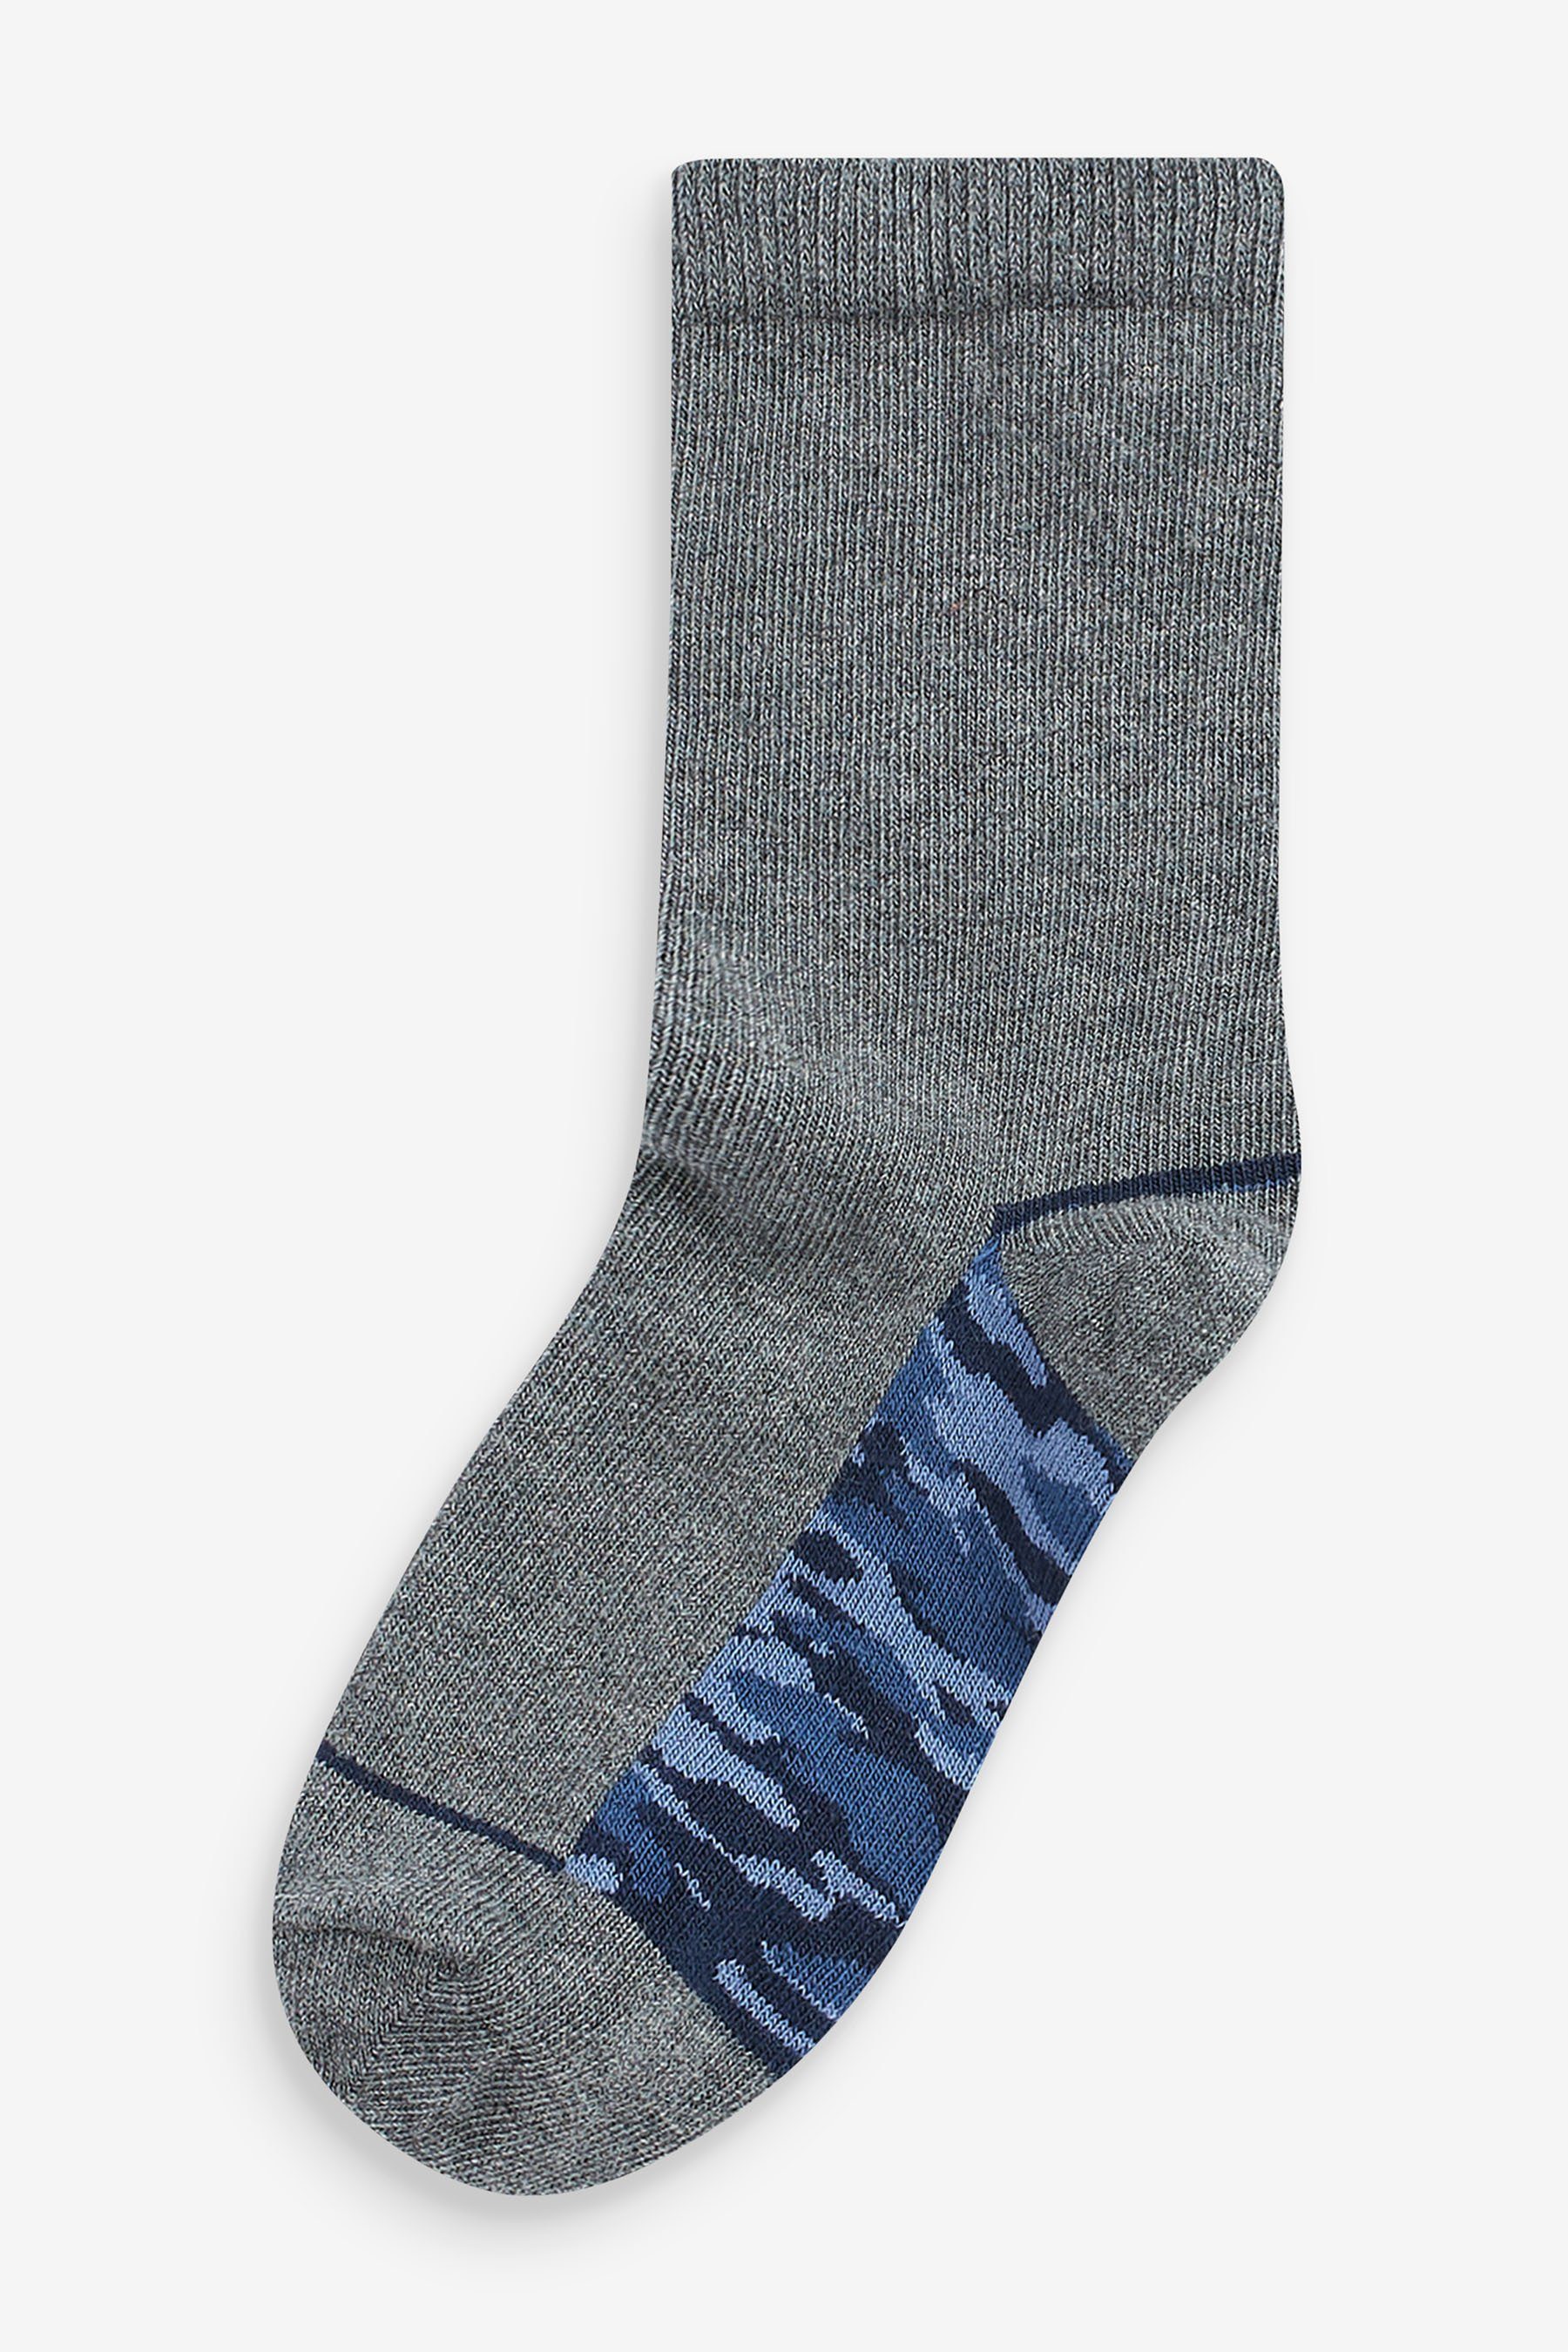 Wäsche/Bademode Socken Next Kurzsocken Socken mit hohem Baumwollanteil, 7er-Pack (7-Paar)